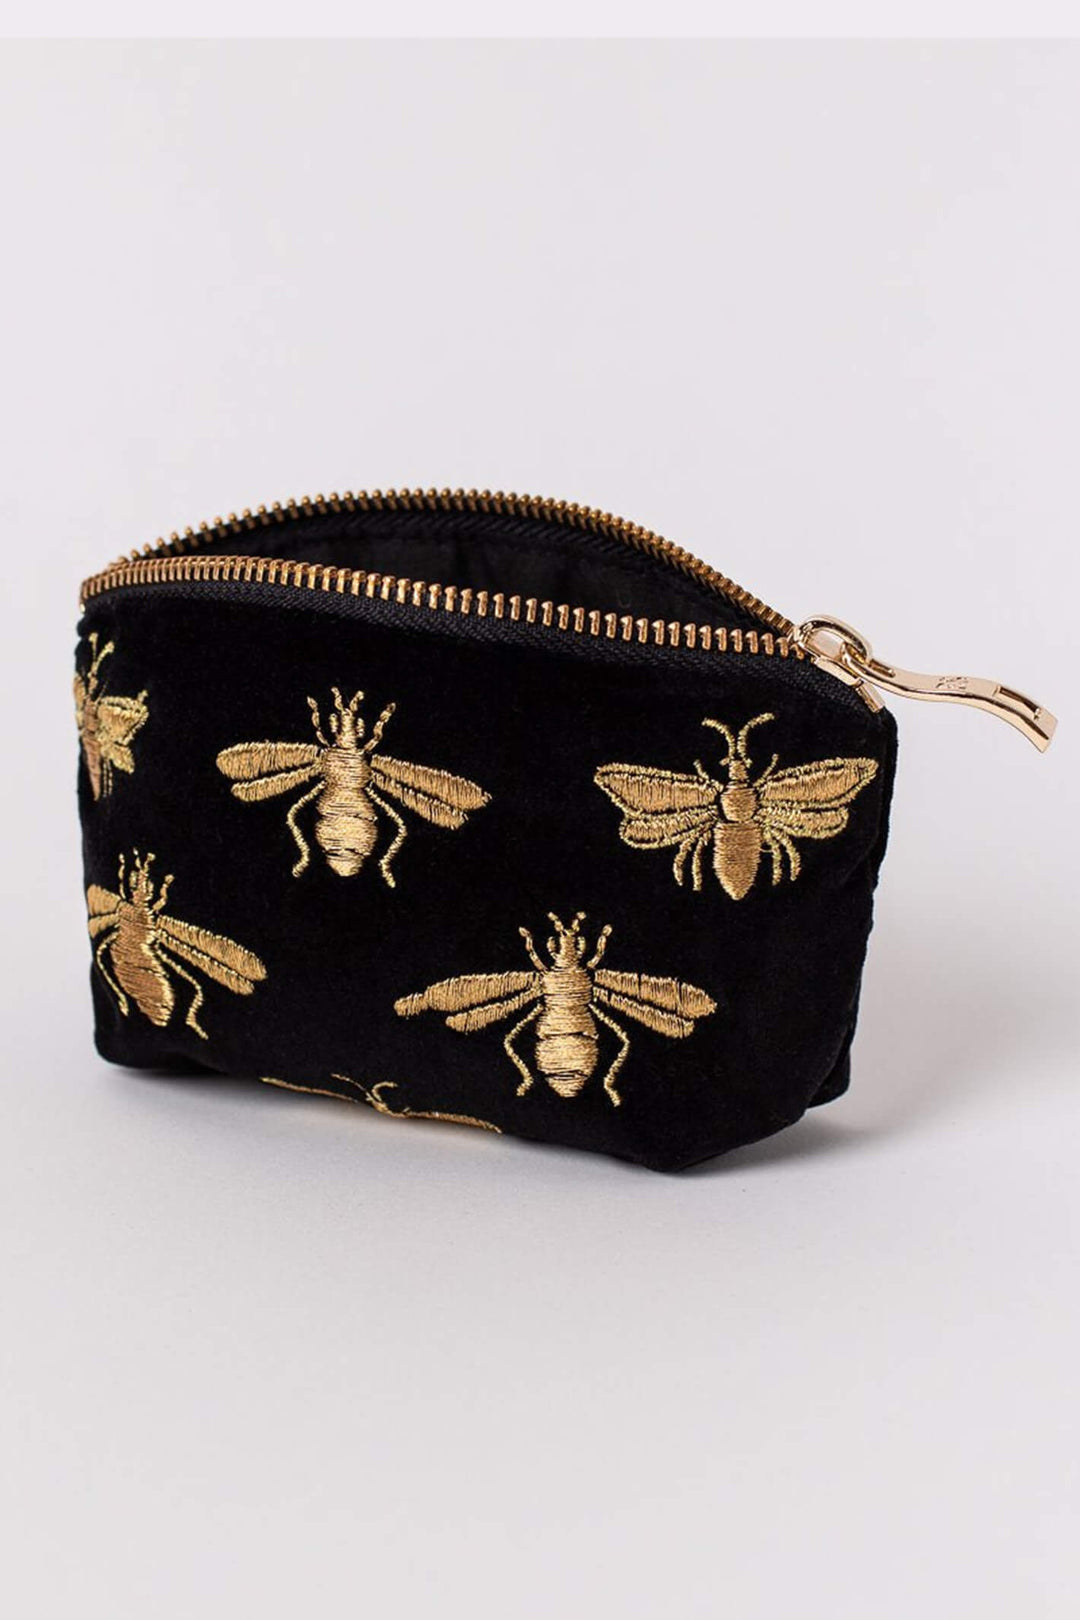 Elizabeth Scarlett 65832 Charcoal Velvet Honey Bee Purse - Olivia Grace Fashion